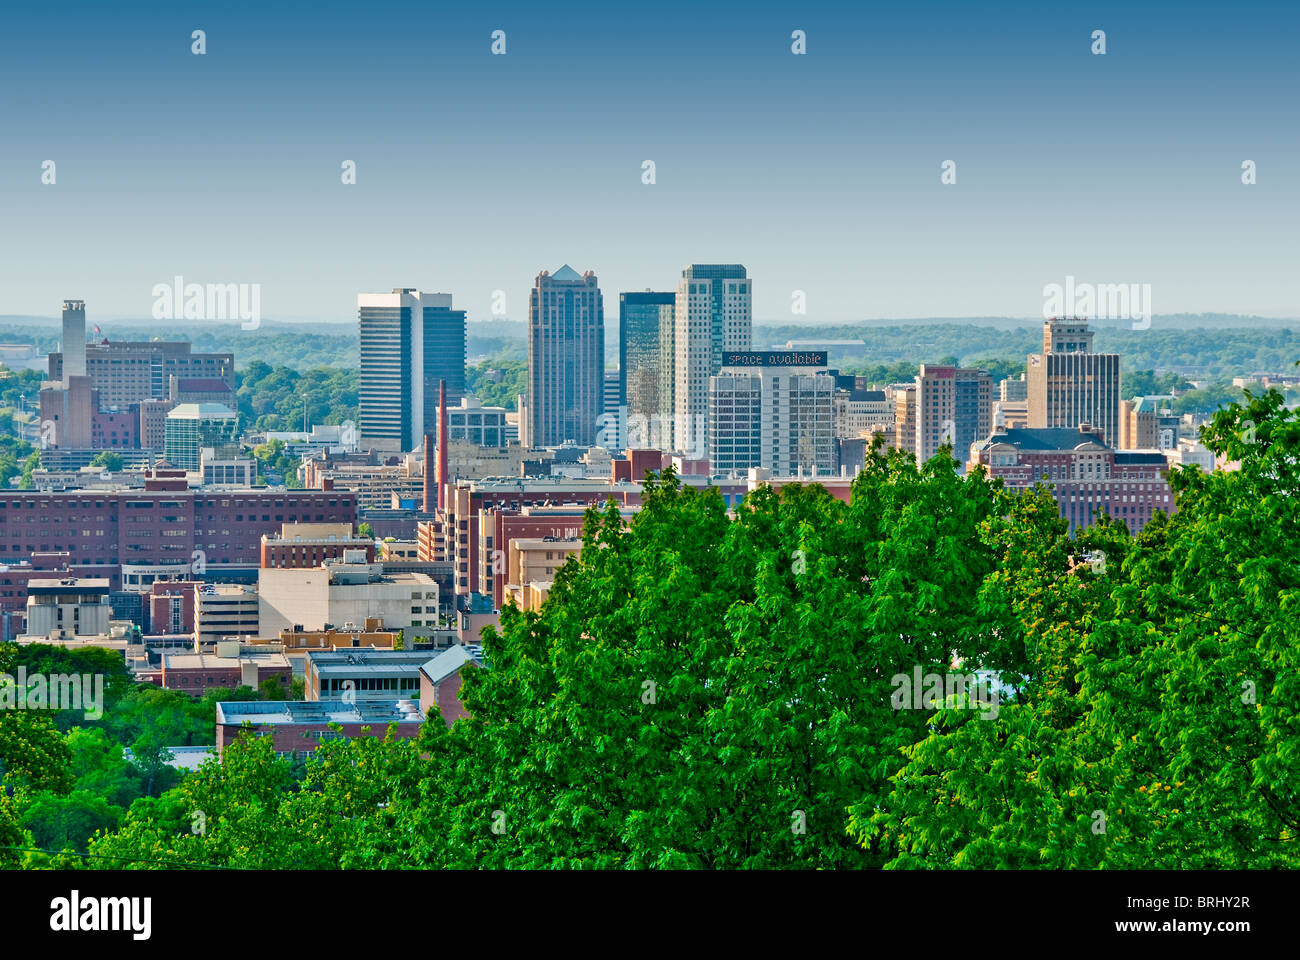 Overview of city center of Birmingham, Alabama, USA Stock Photo